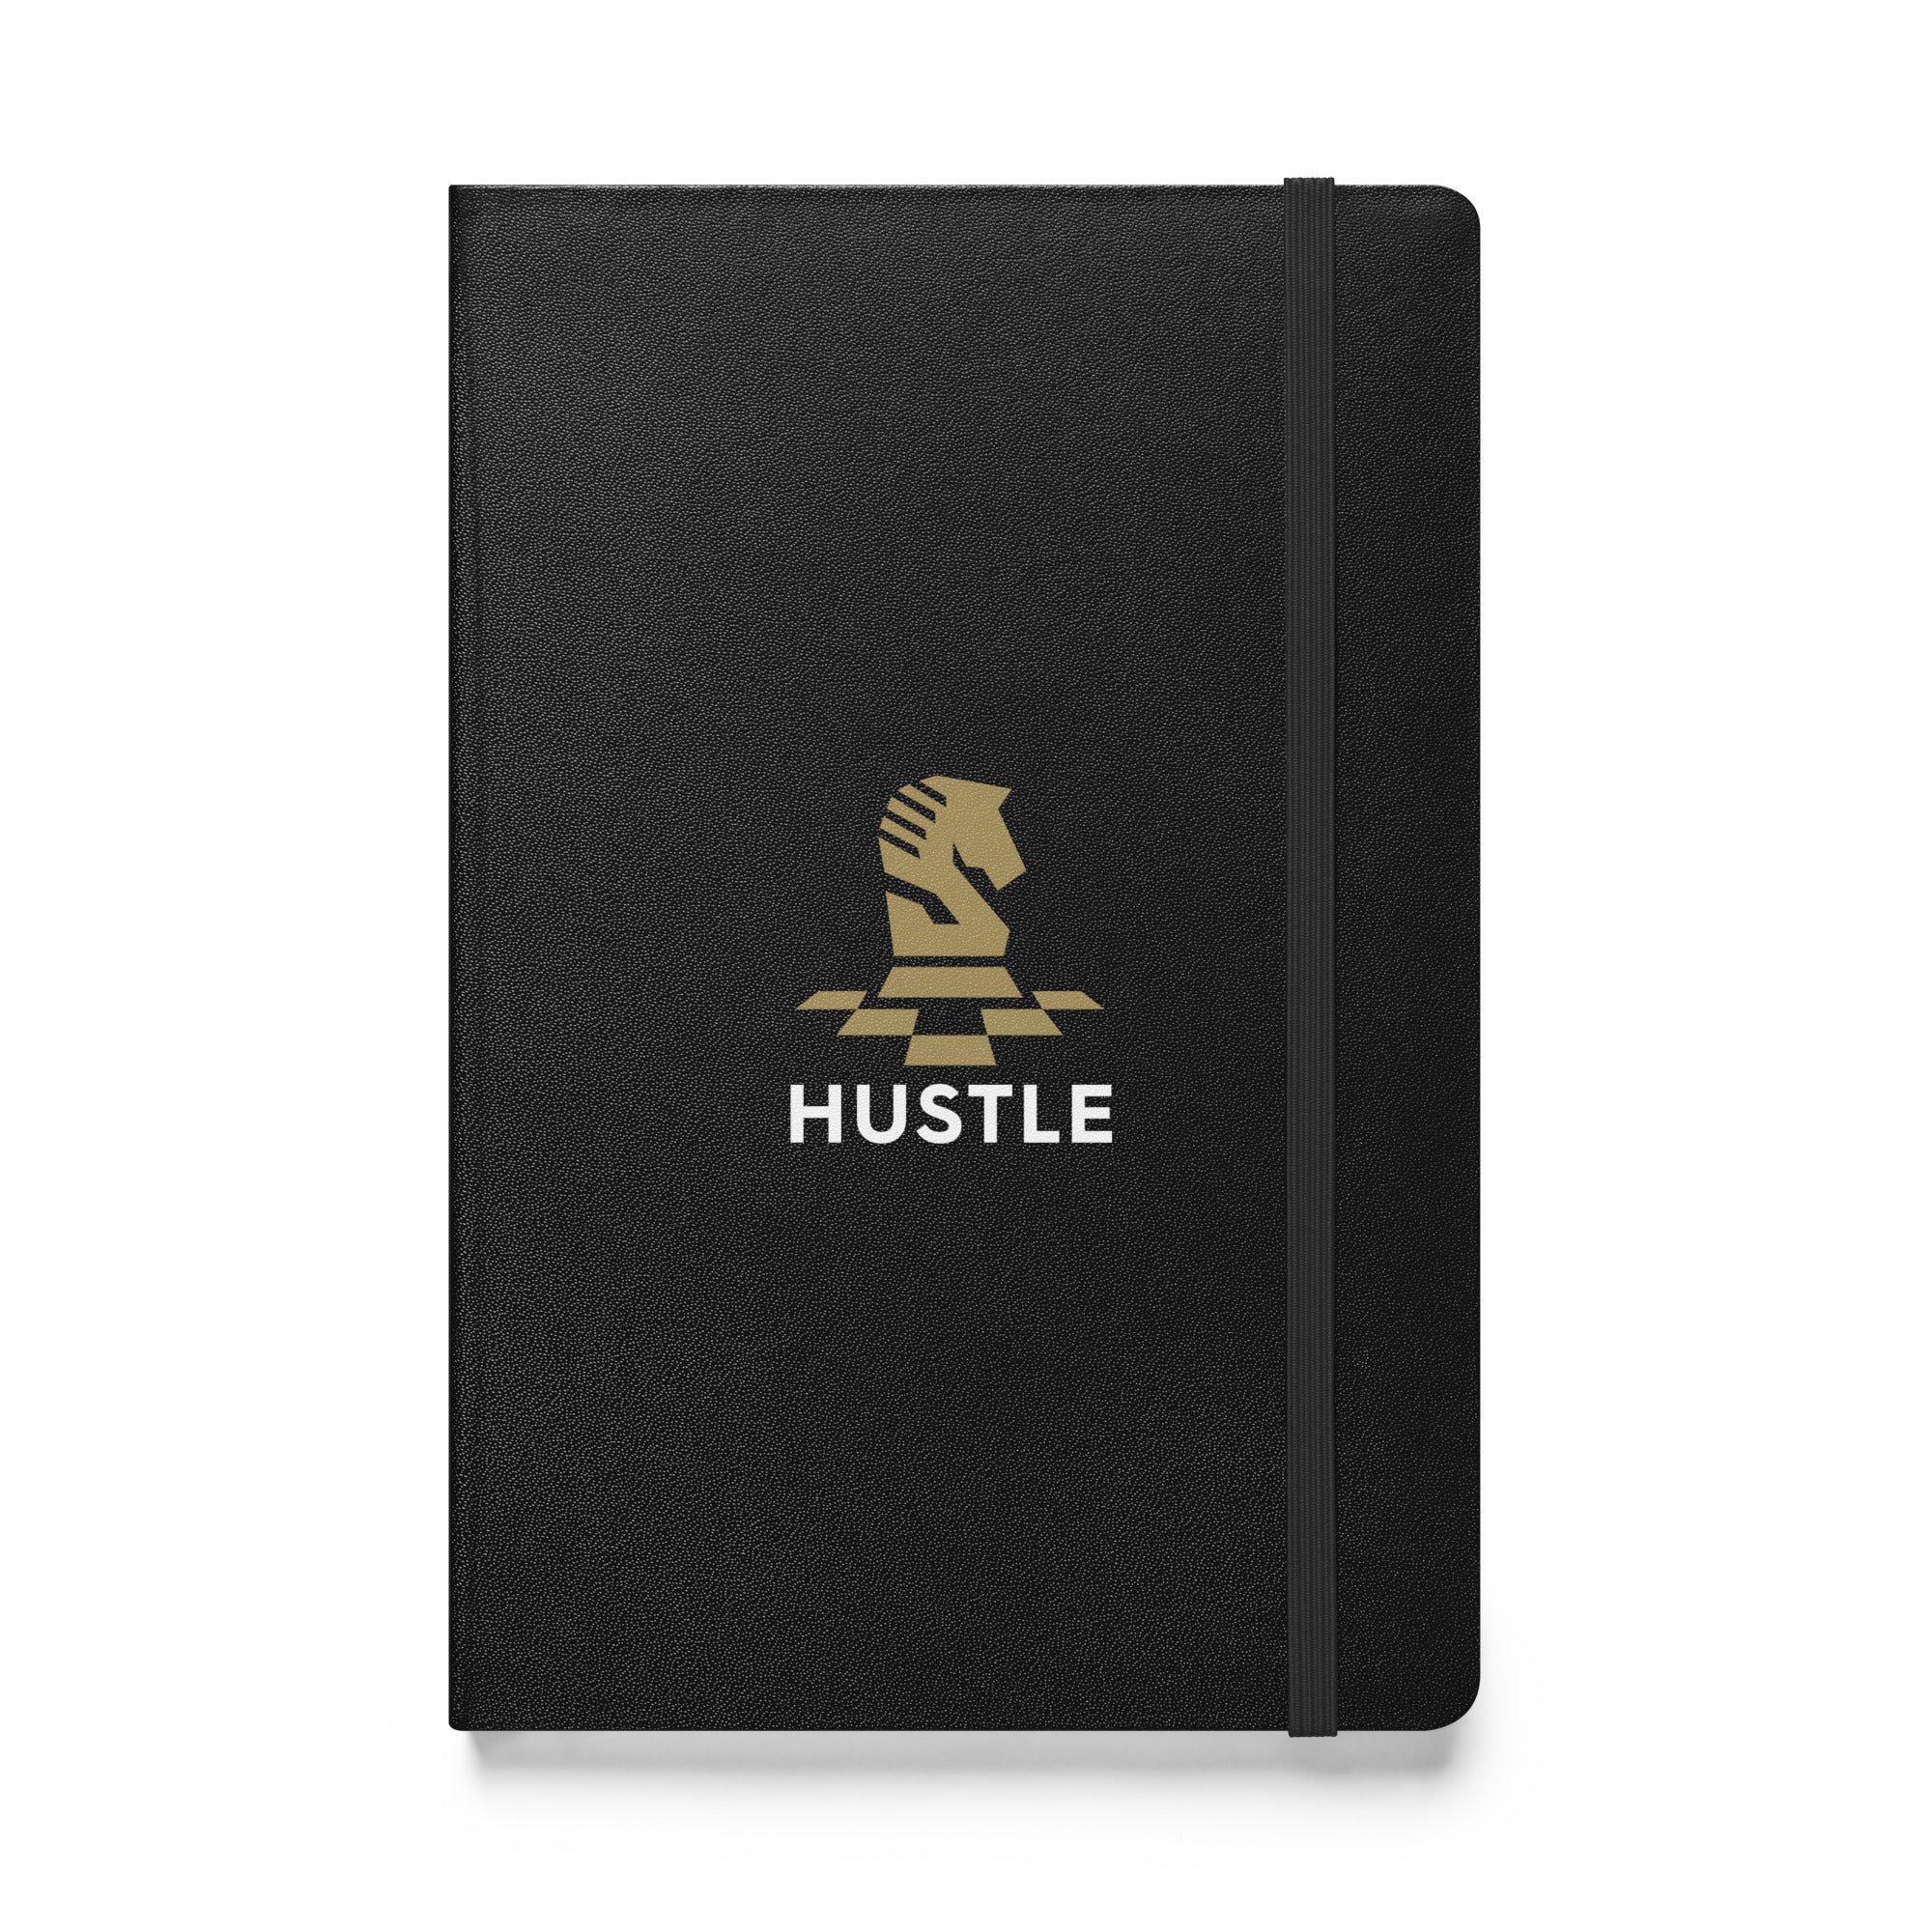 Hustle Hardcover bound notebook